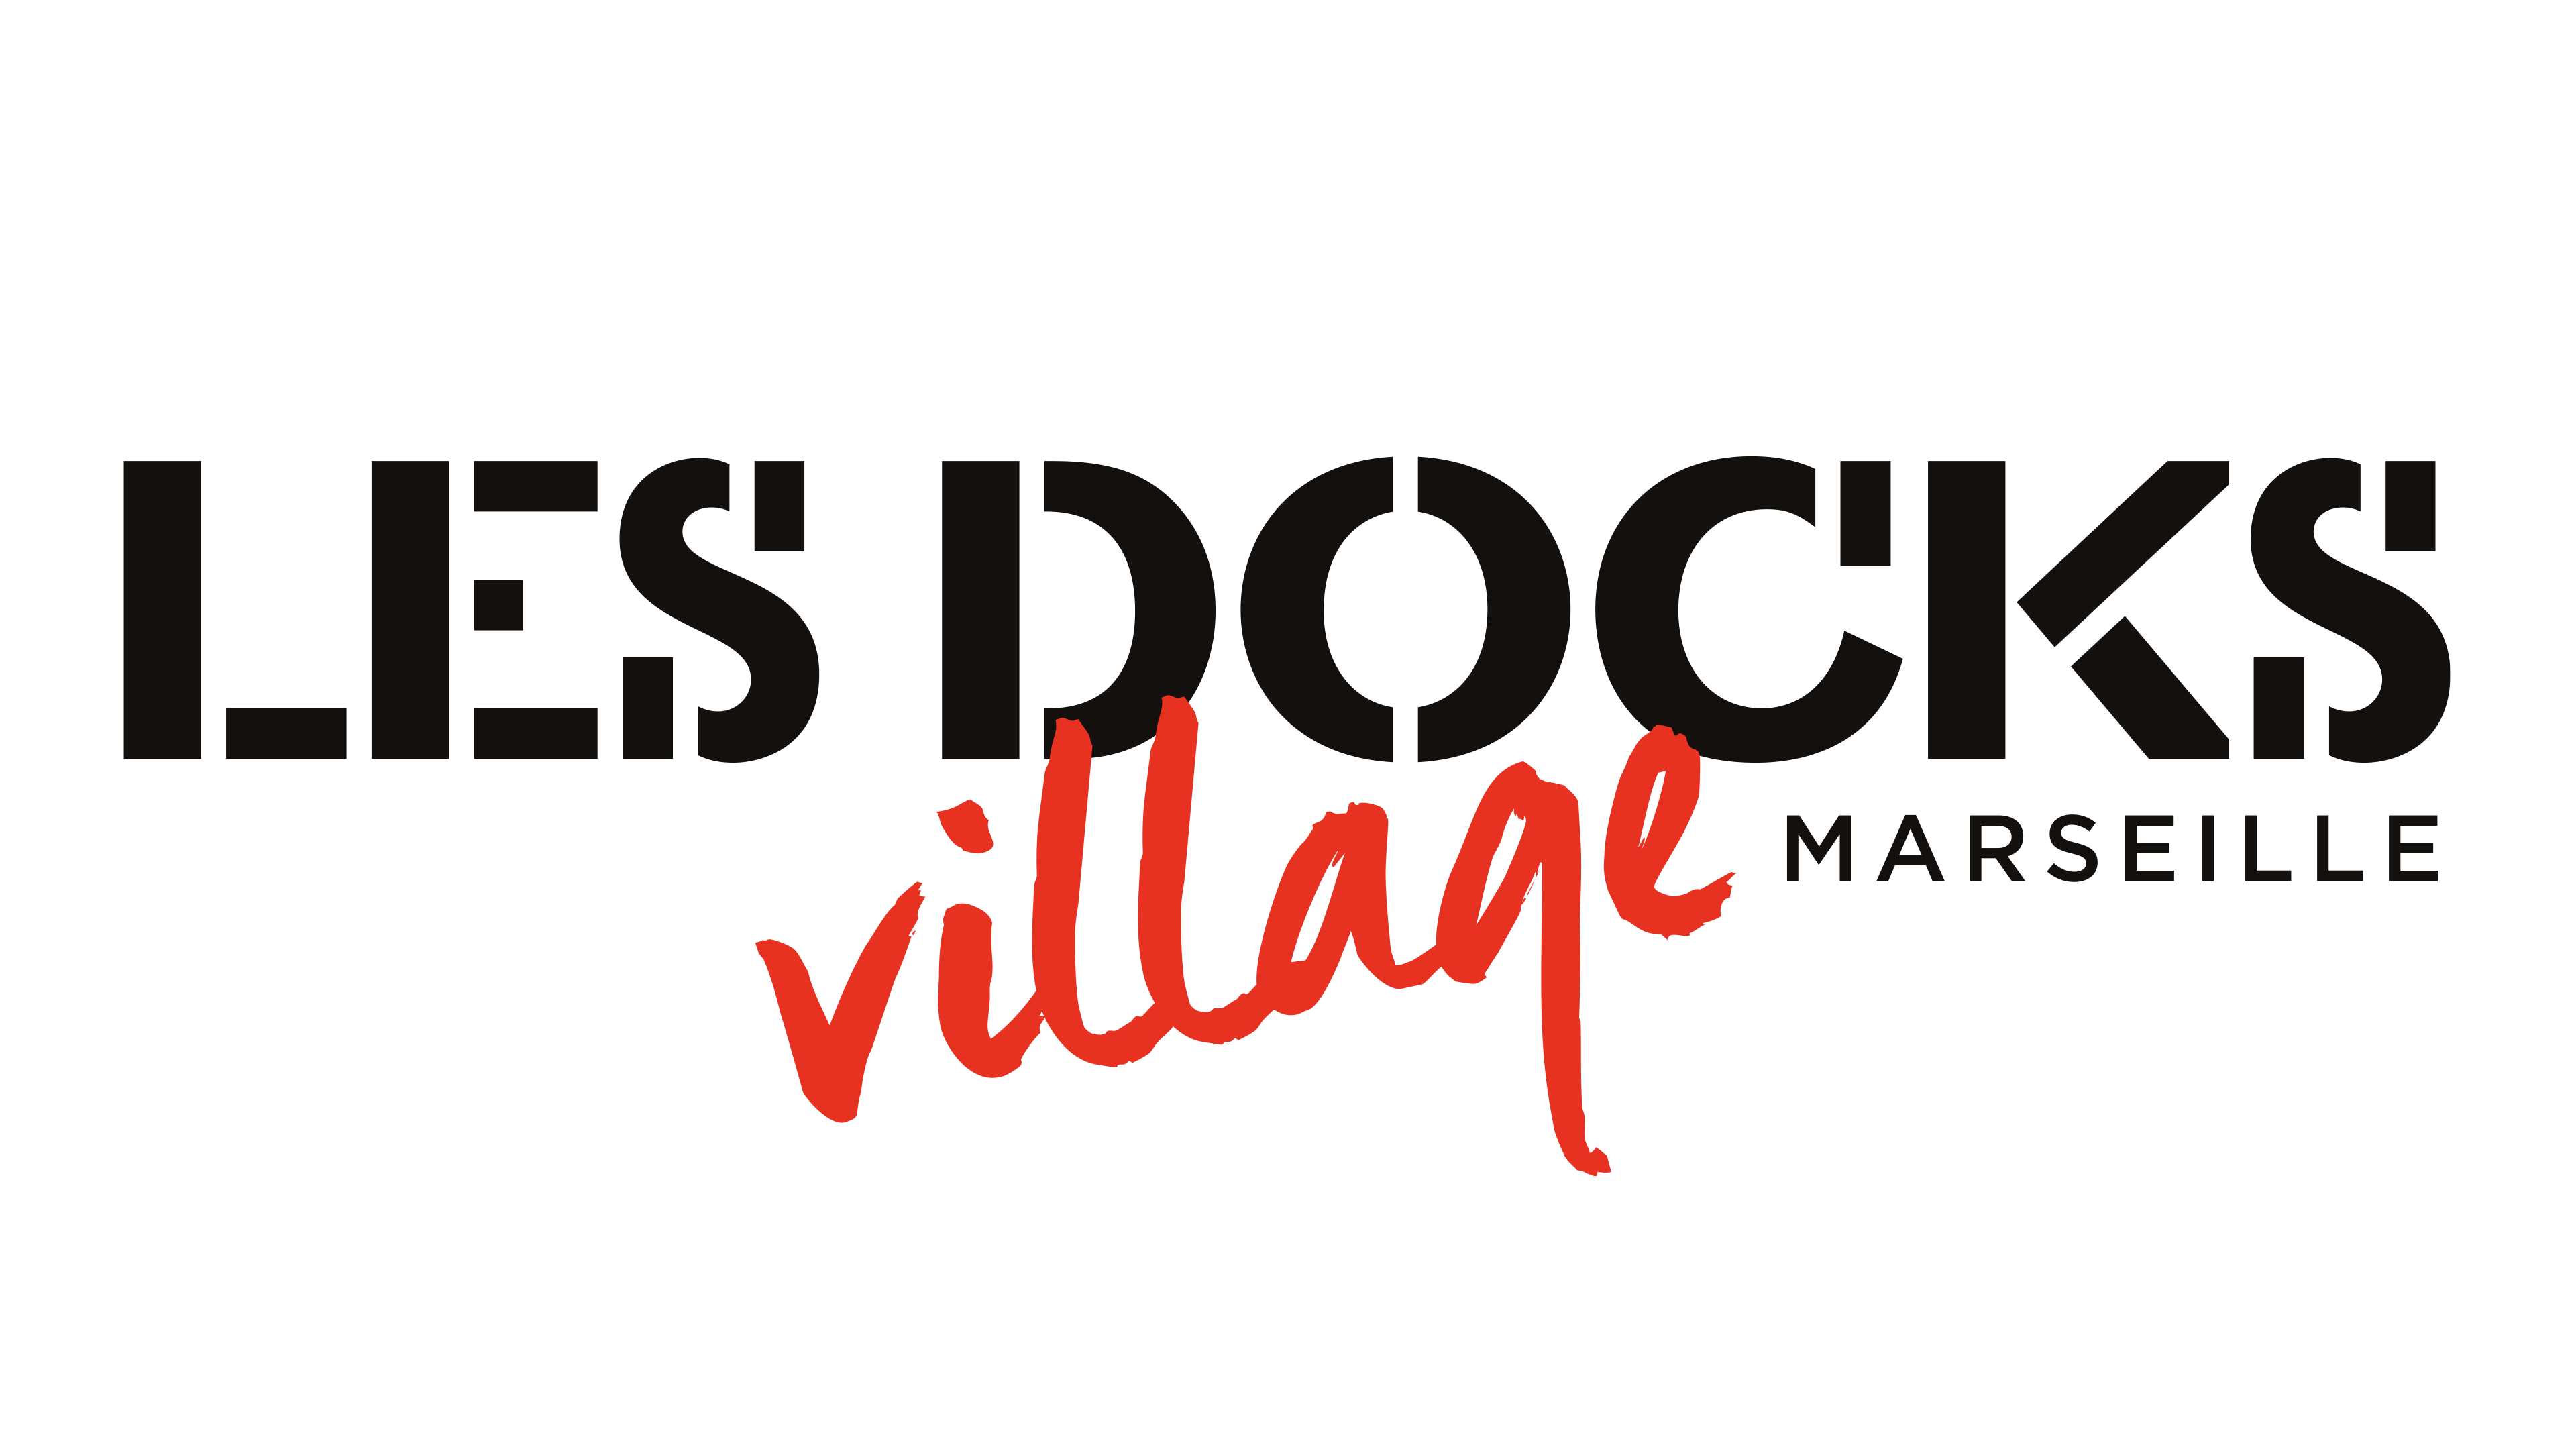 Les Docks Village